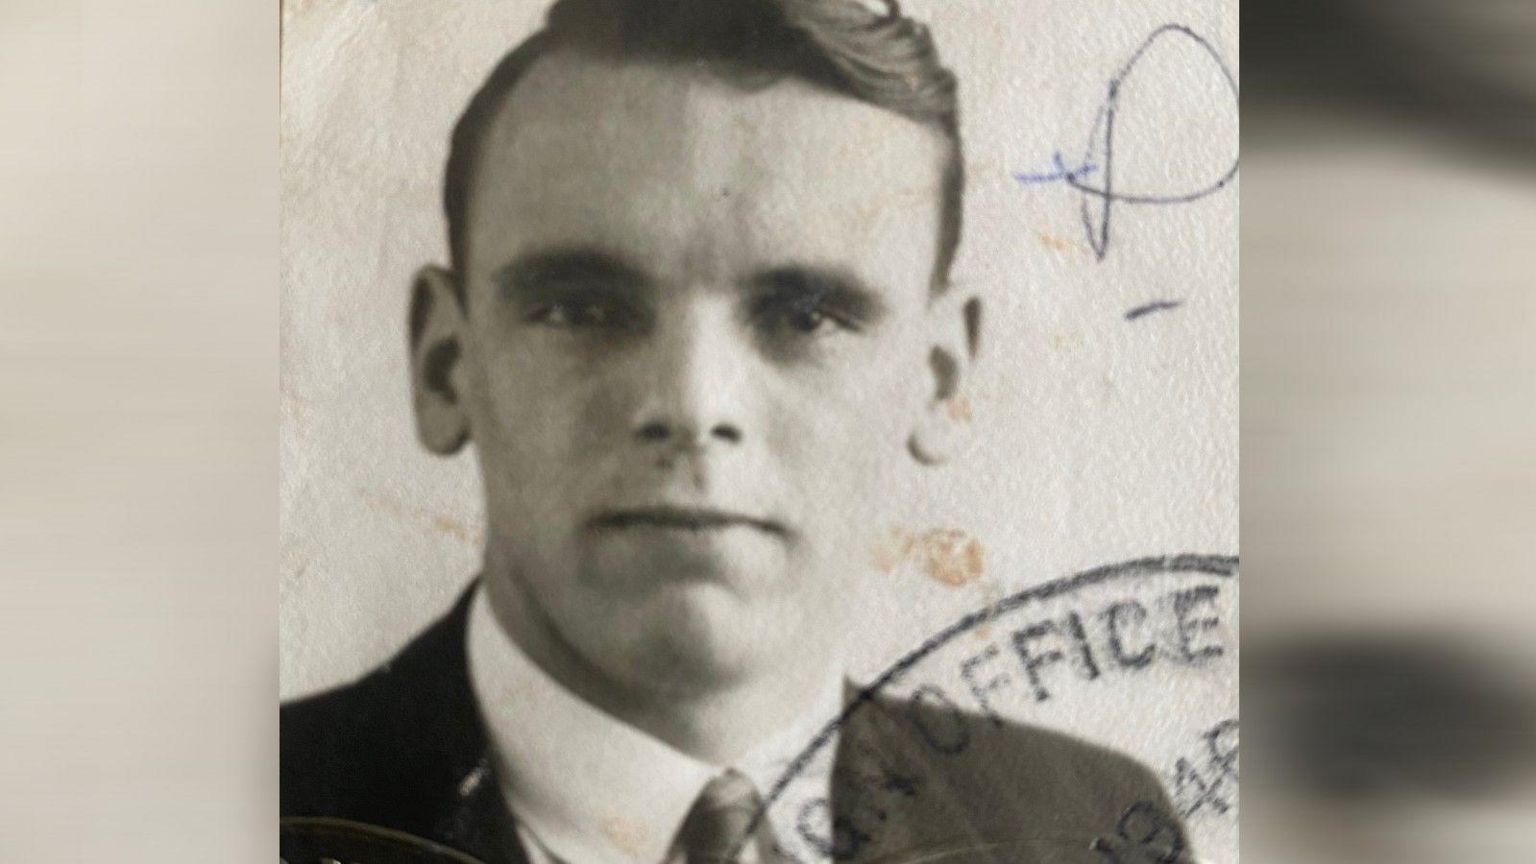 A passport photo of John as a young man, taken in 1946